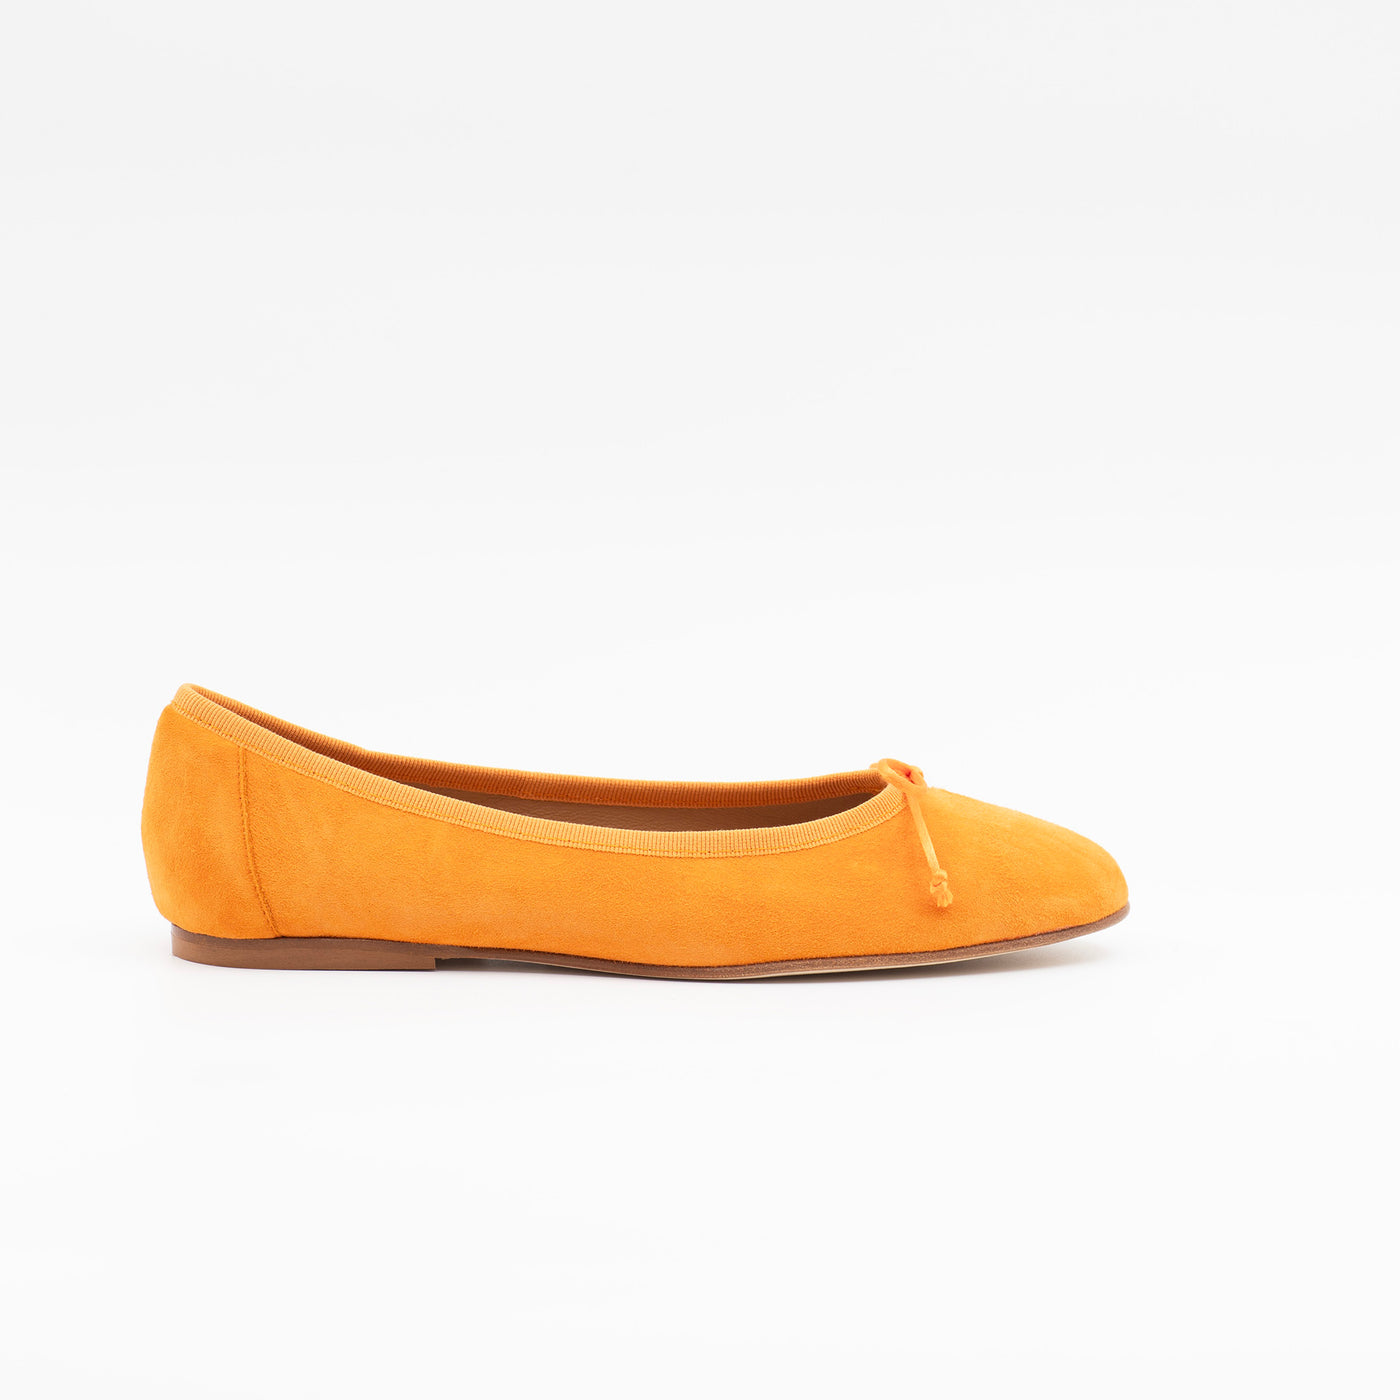 Ballet flat in orange suede leather